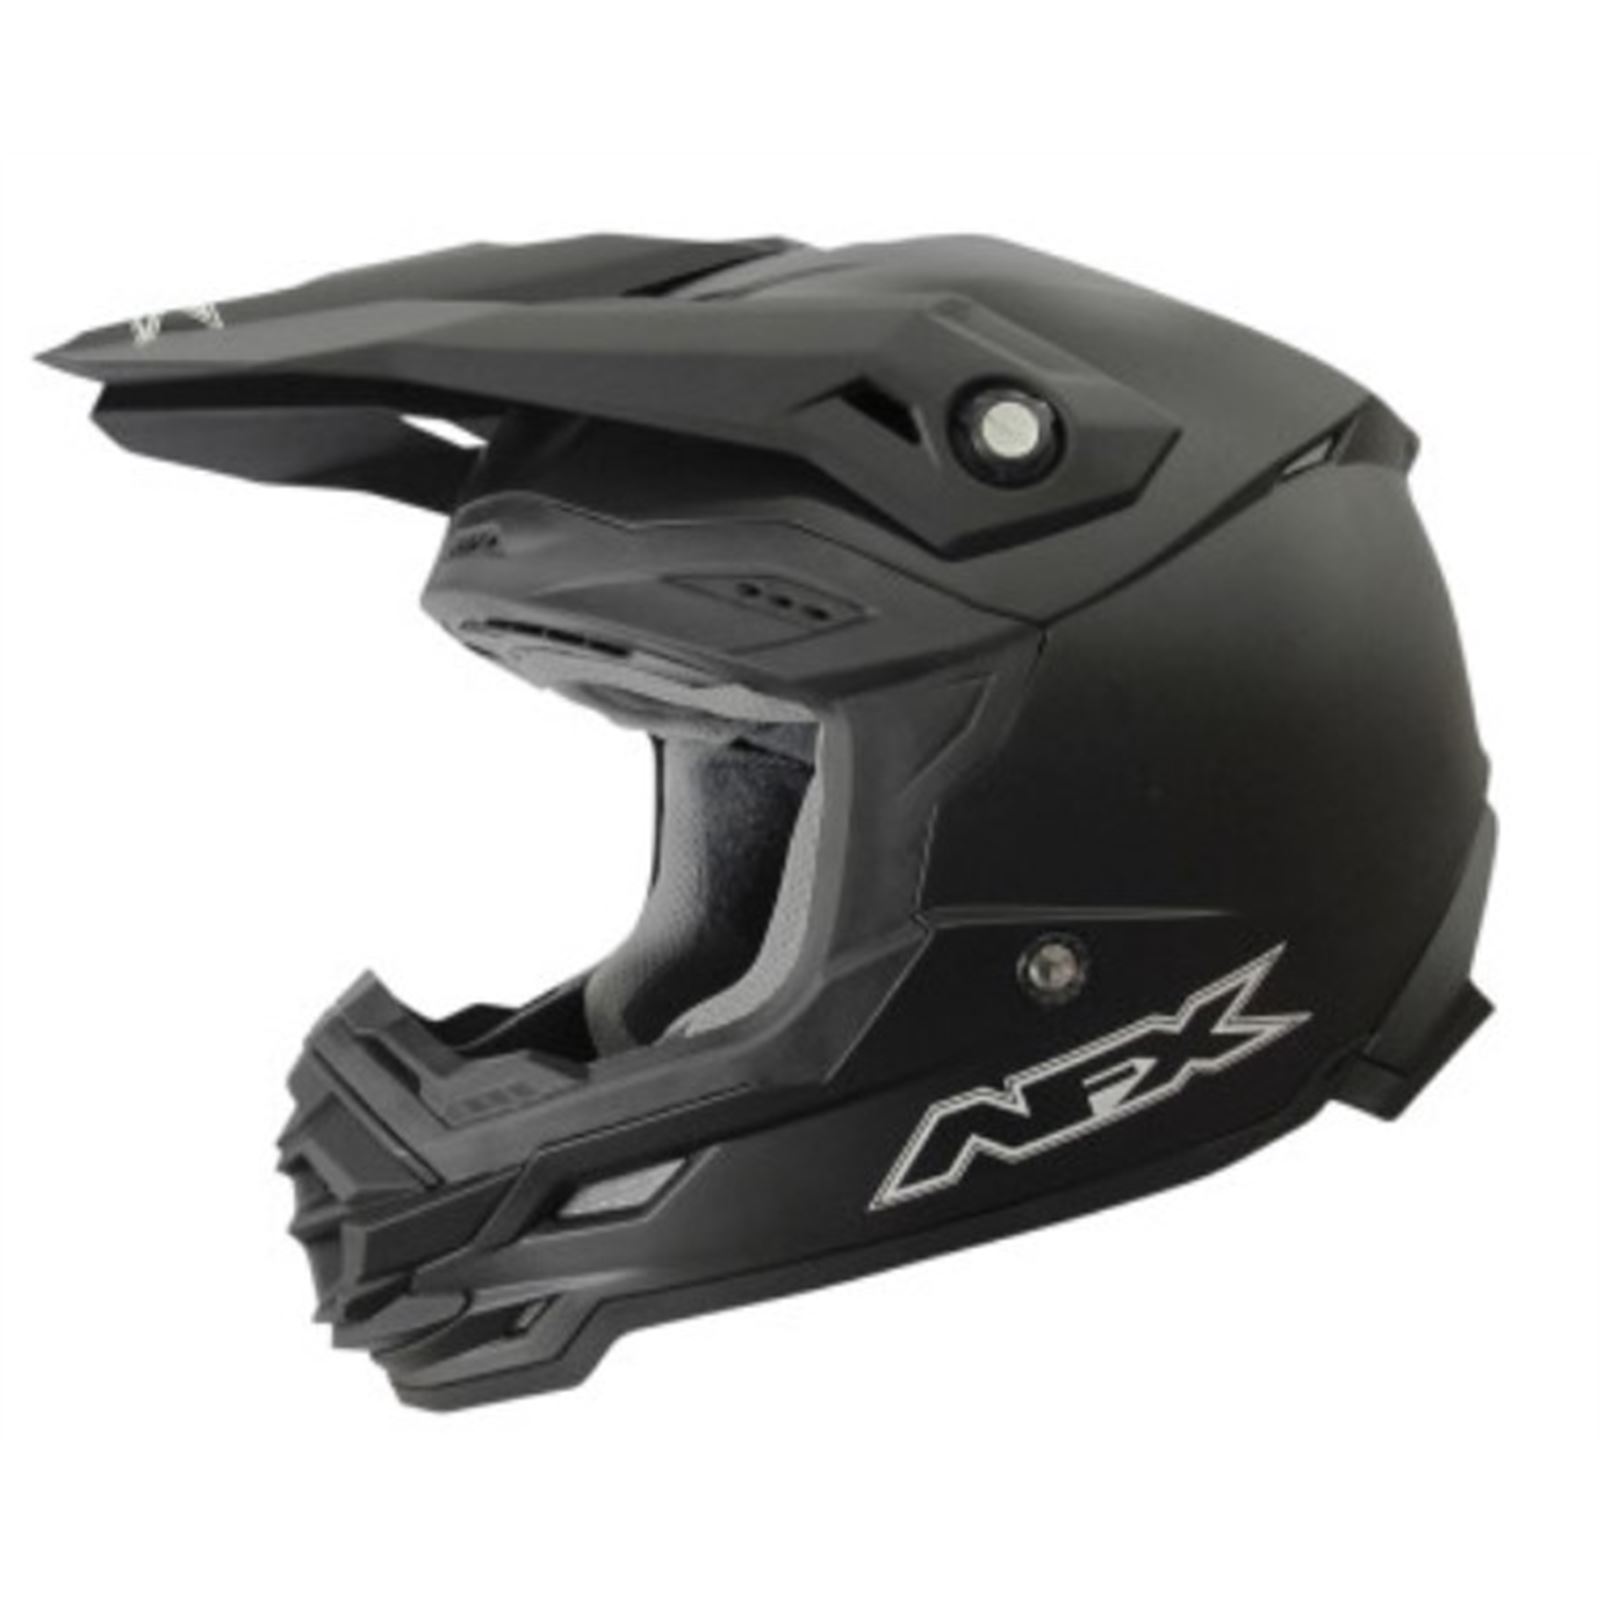 AFX FX-19R Helmet